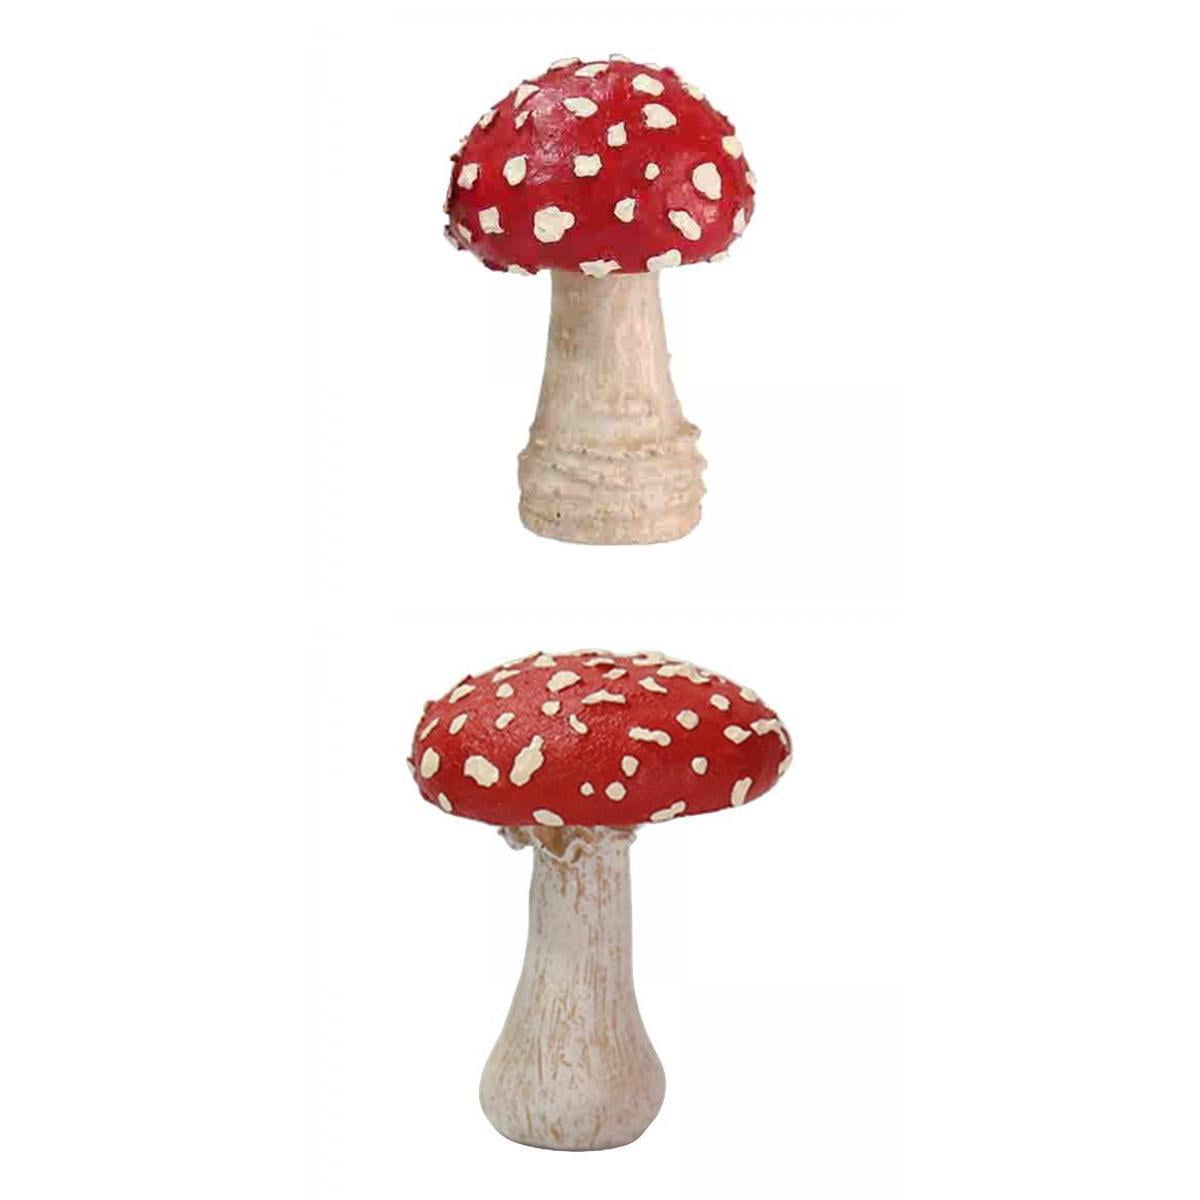 3x Mushroom Garden Ornament Miniature Figurine Resin Craft Plant Fairy DecorHC 